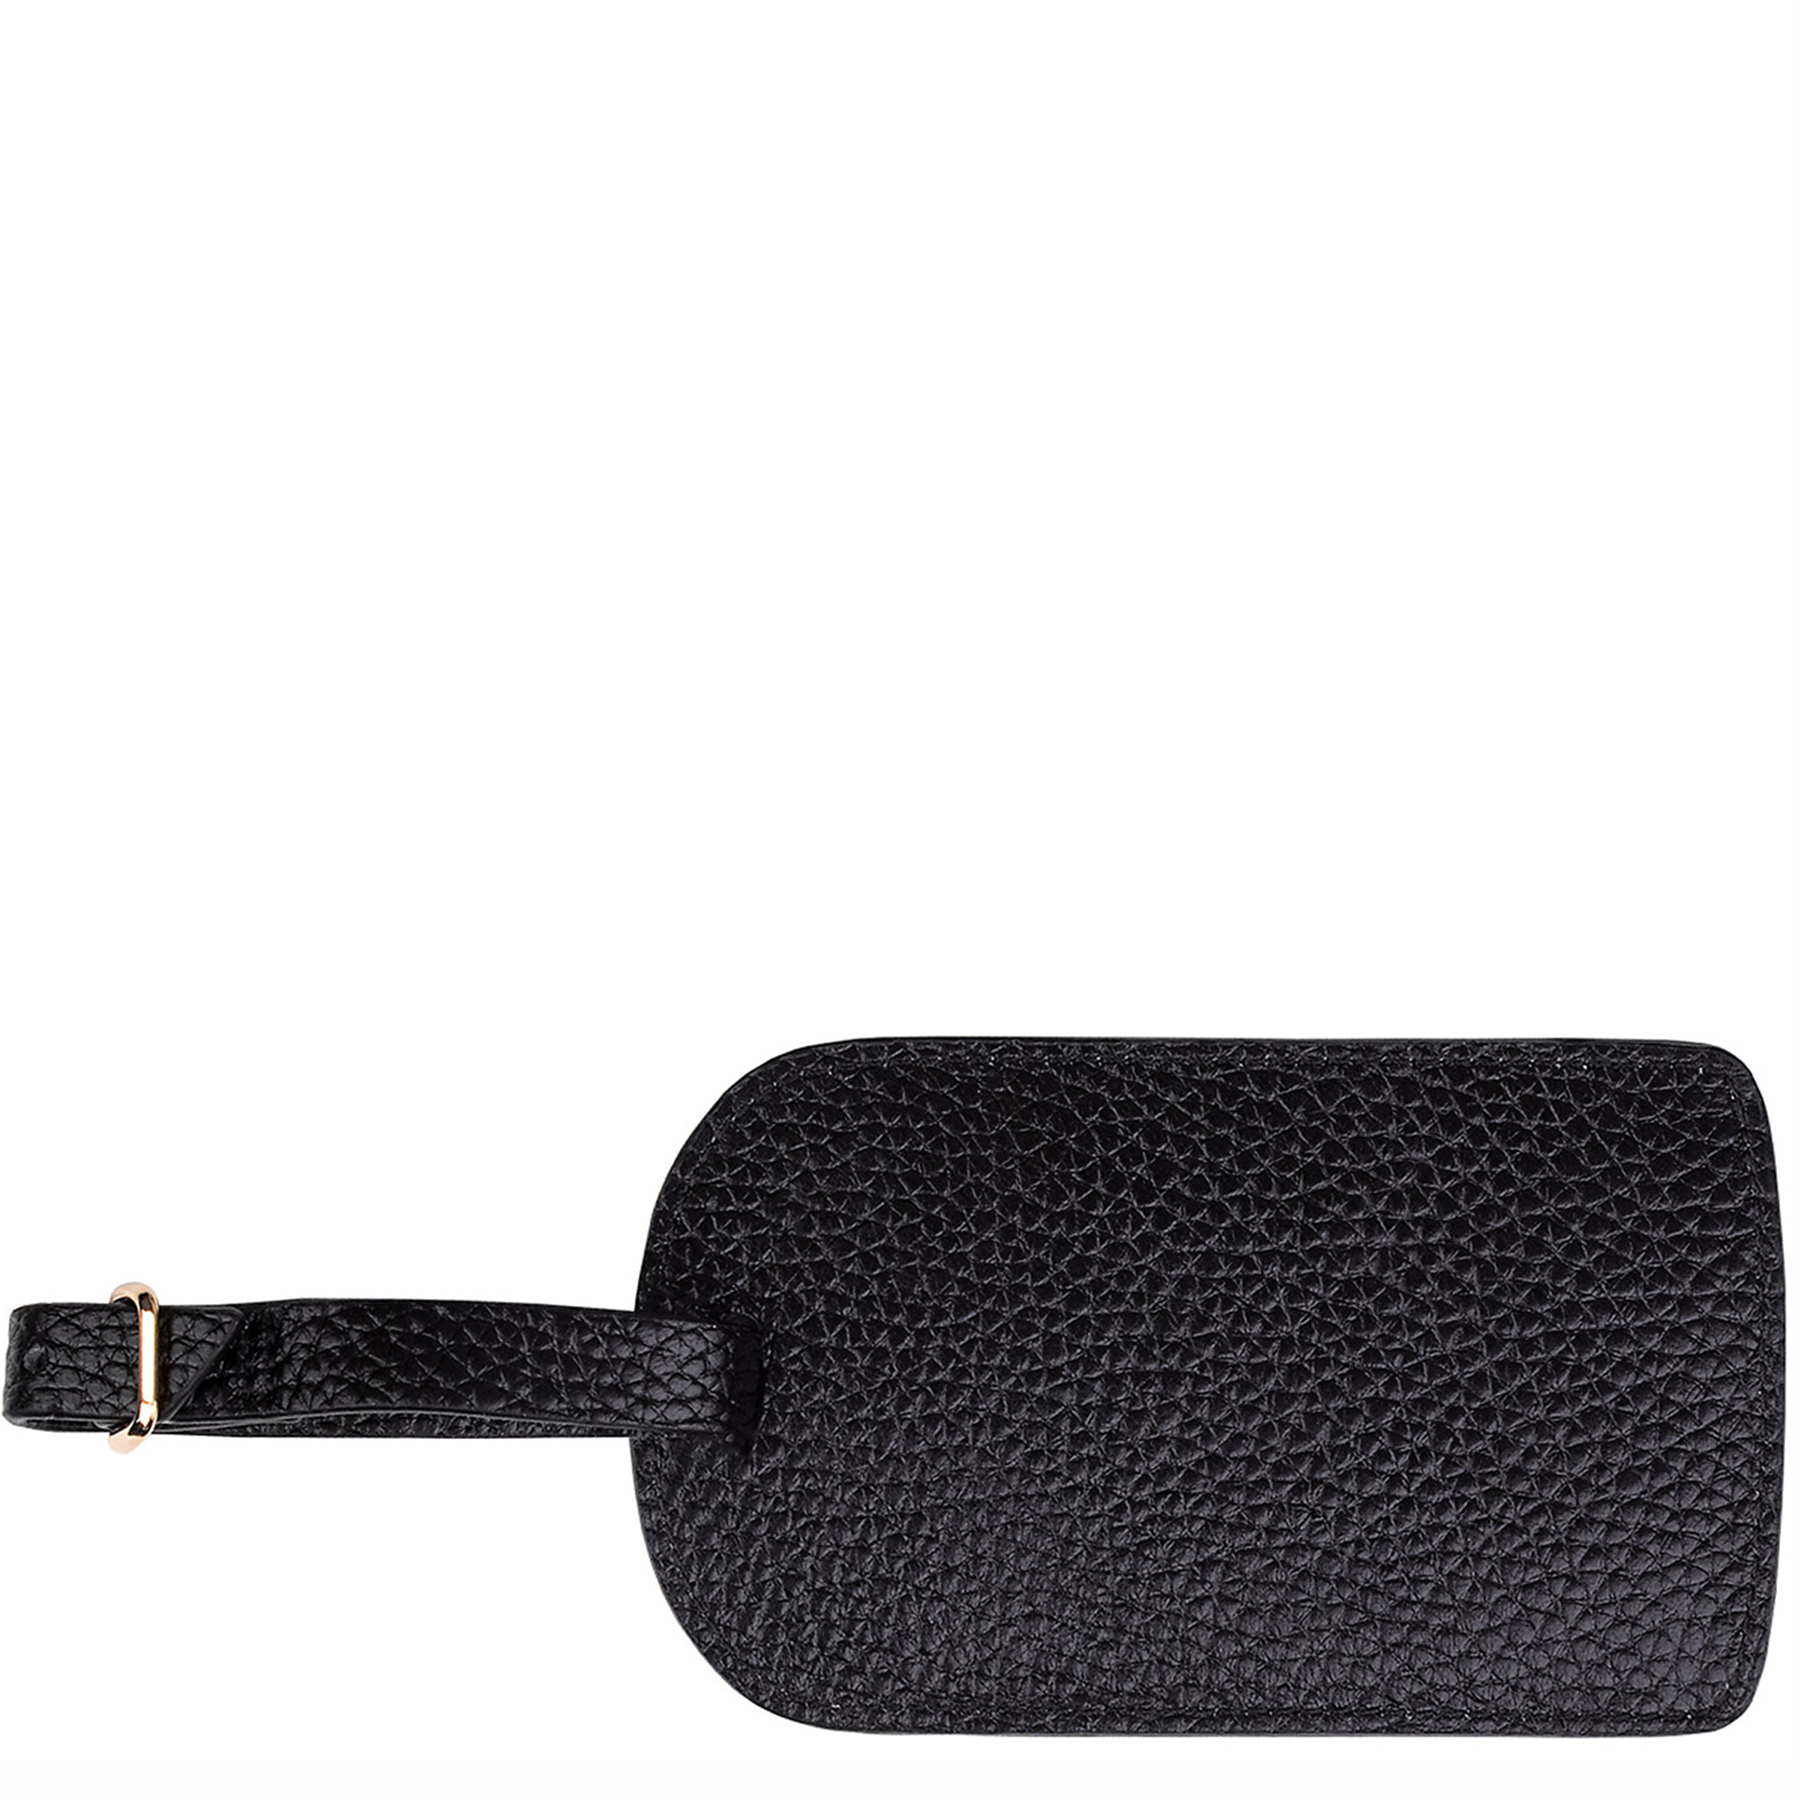 "Amelia" Leather Luggage Tag (Personalizable): Onyx